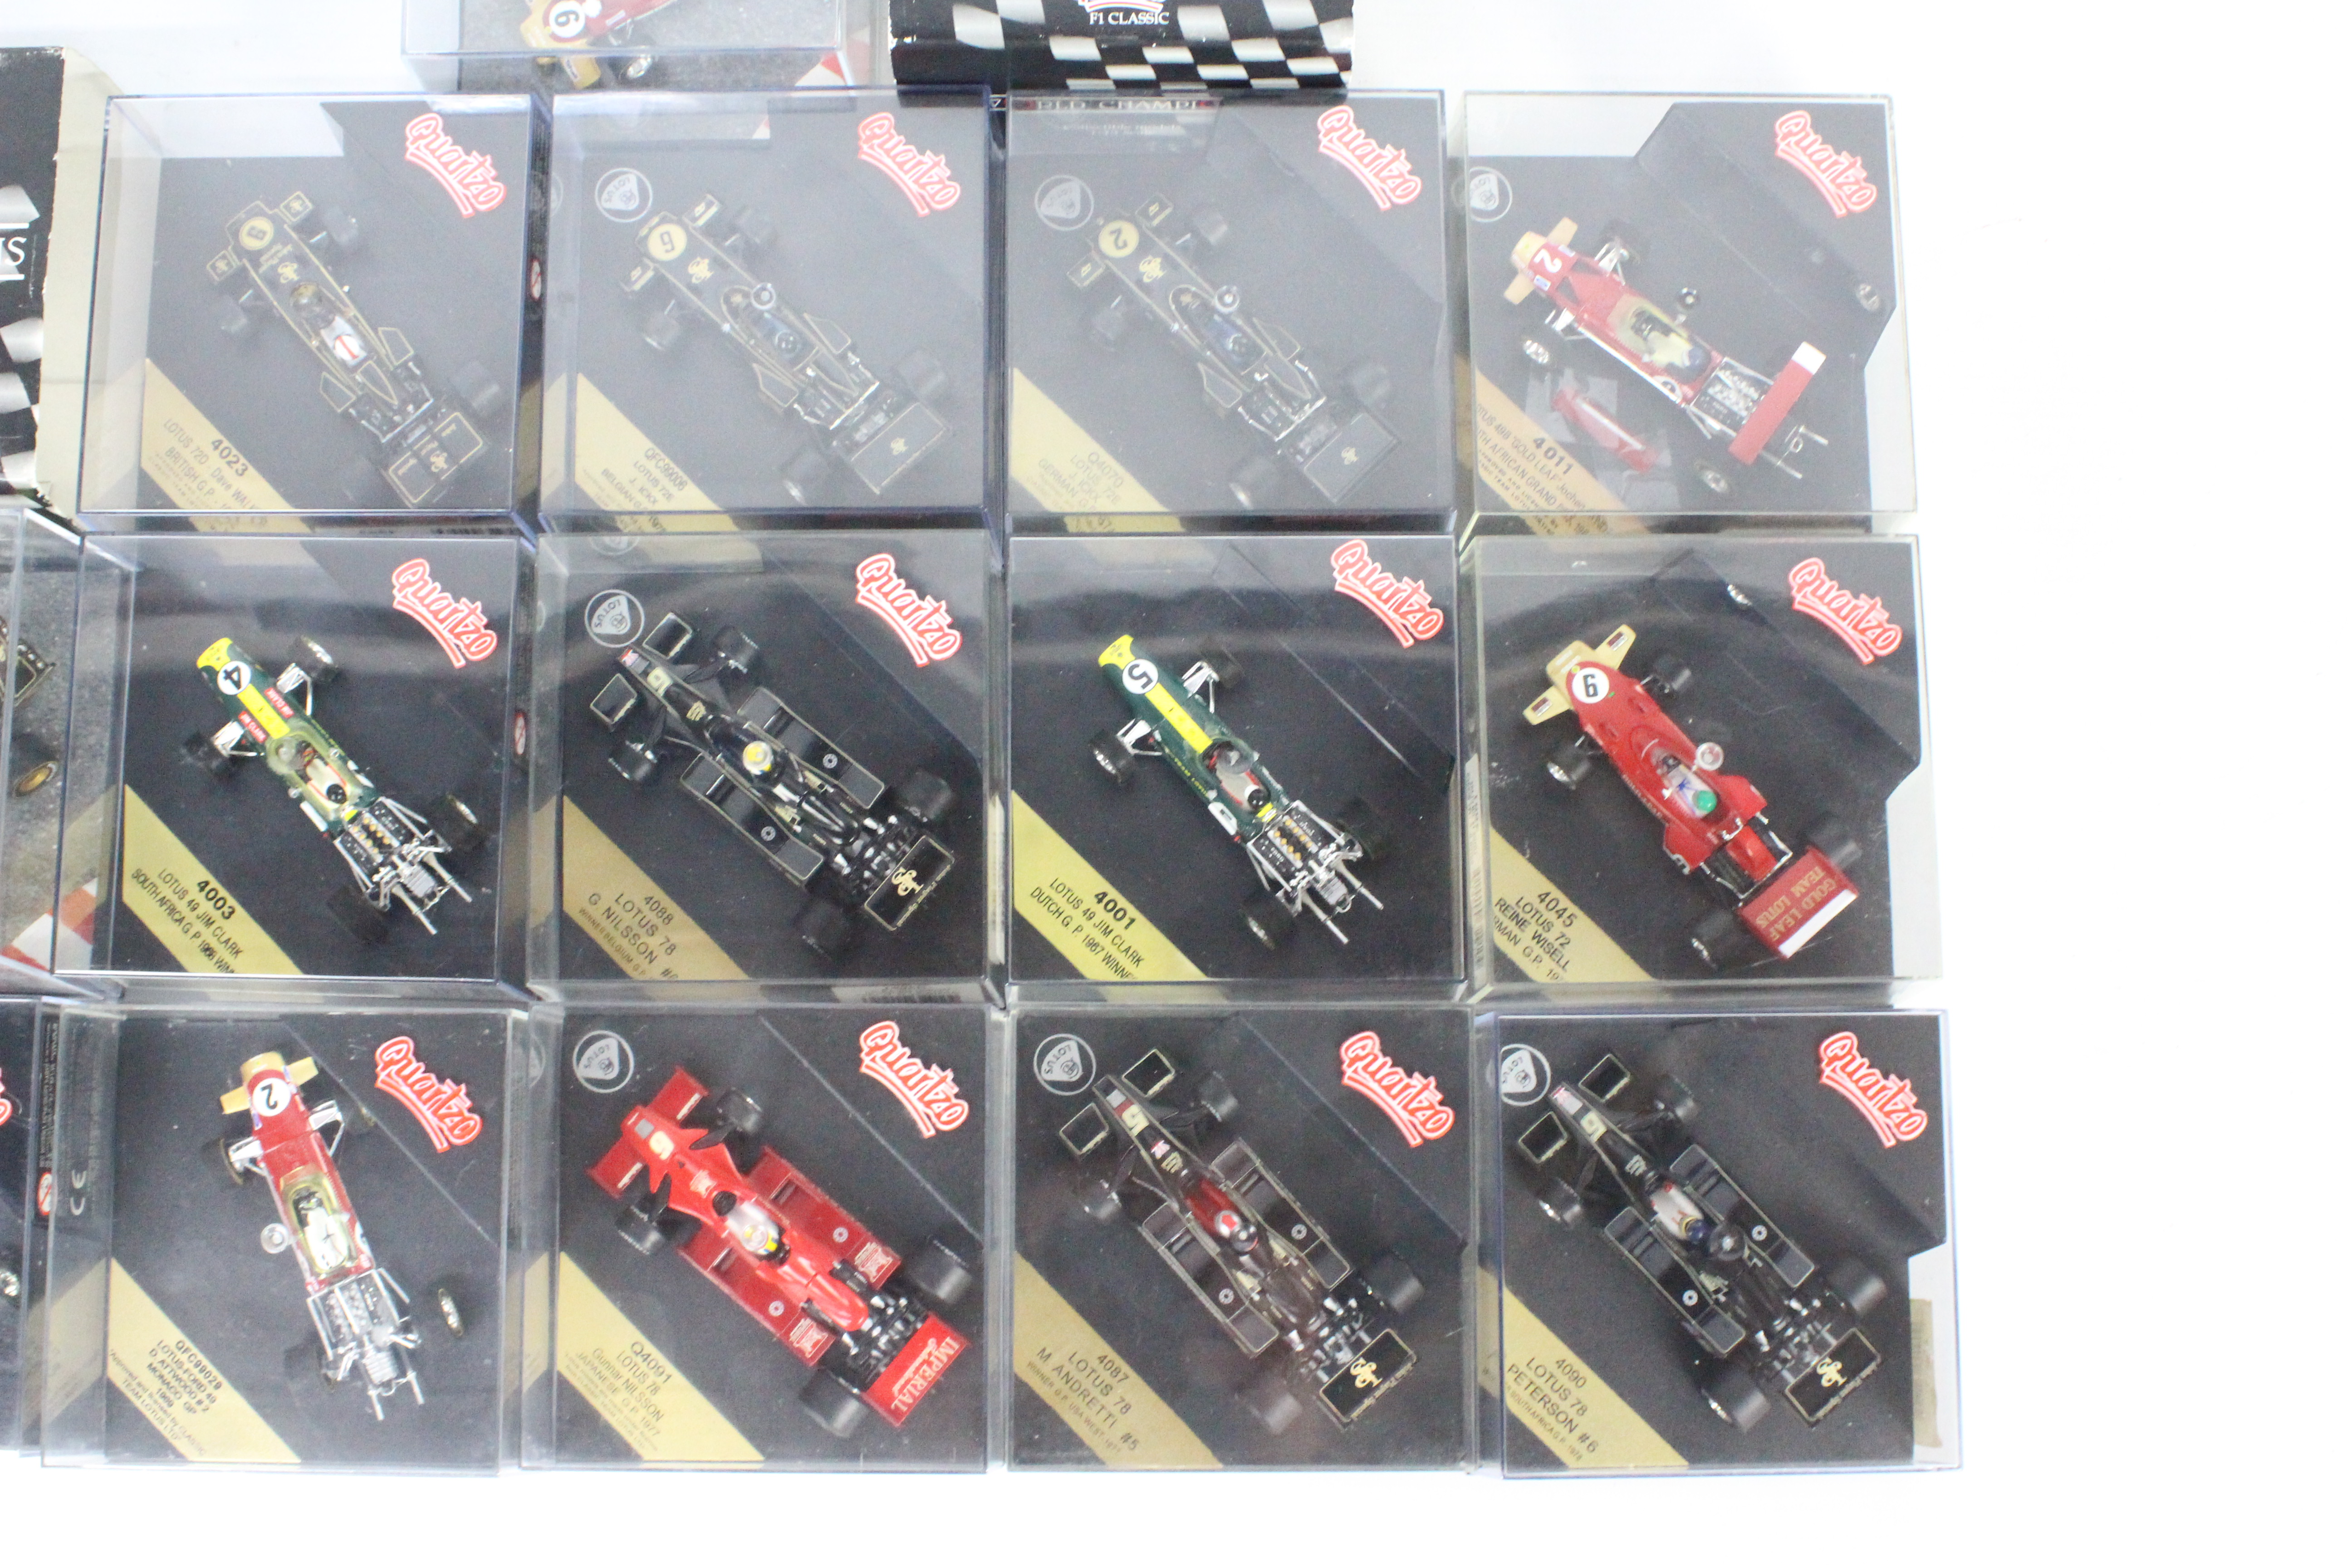 Quartzo - 15 x boxed 1:43 scale Lotus Formula One cars including 1968 Jim Clark Lotus 49 # 4003, - Image 3 of 3